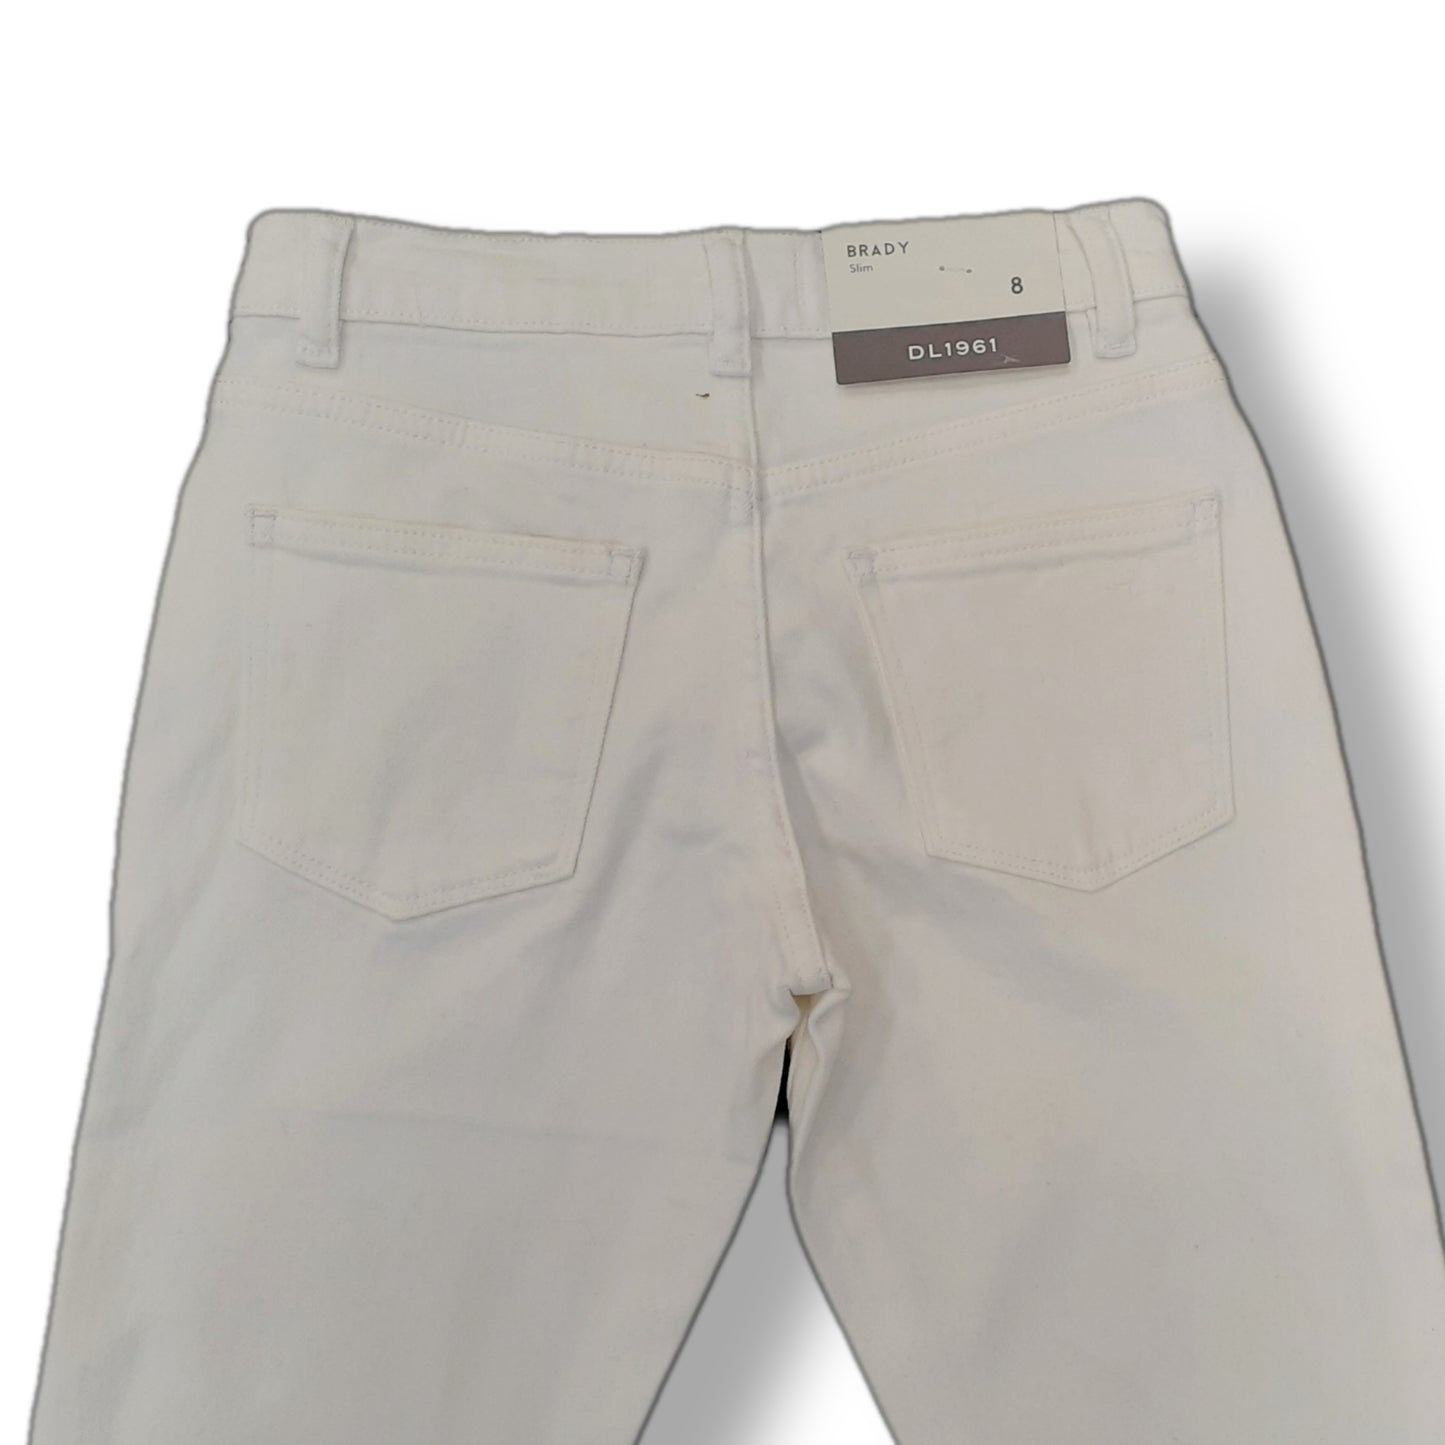 DL 1961 Brady boys white denim jeans